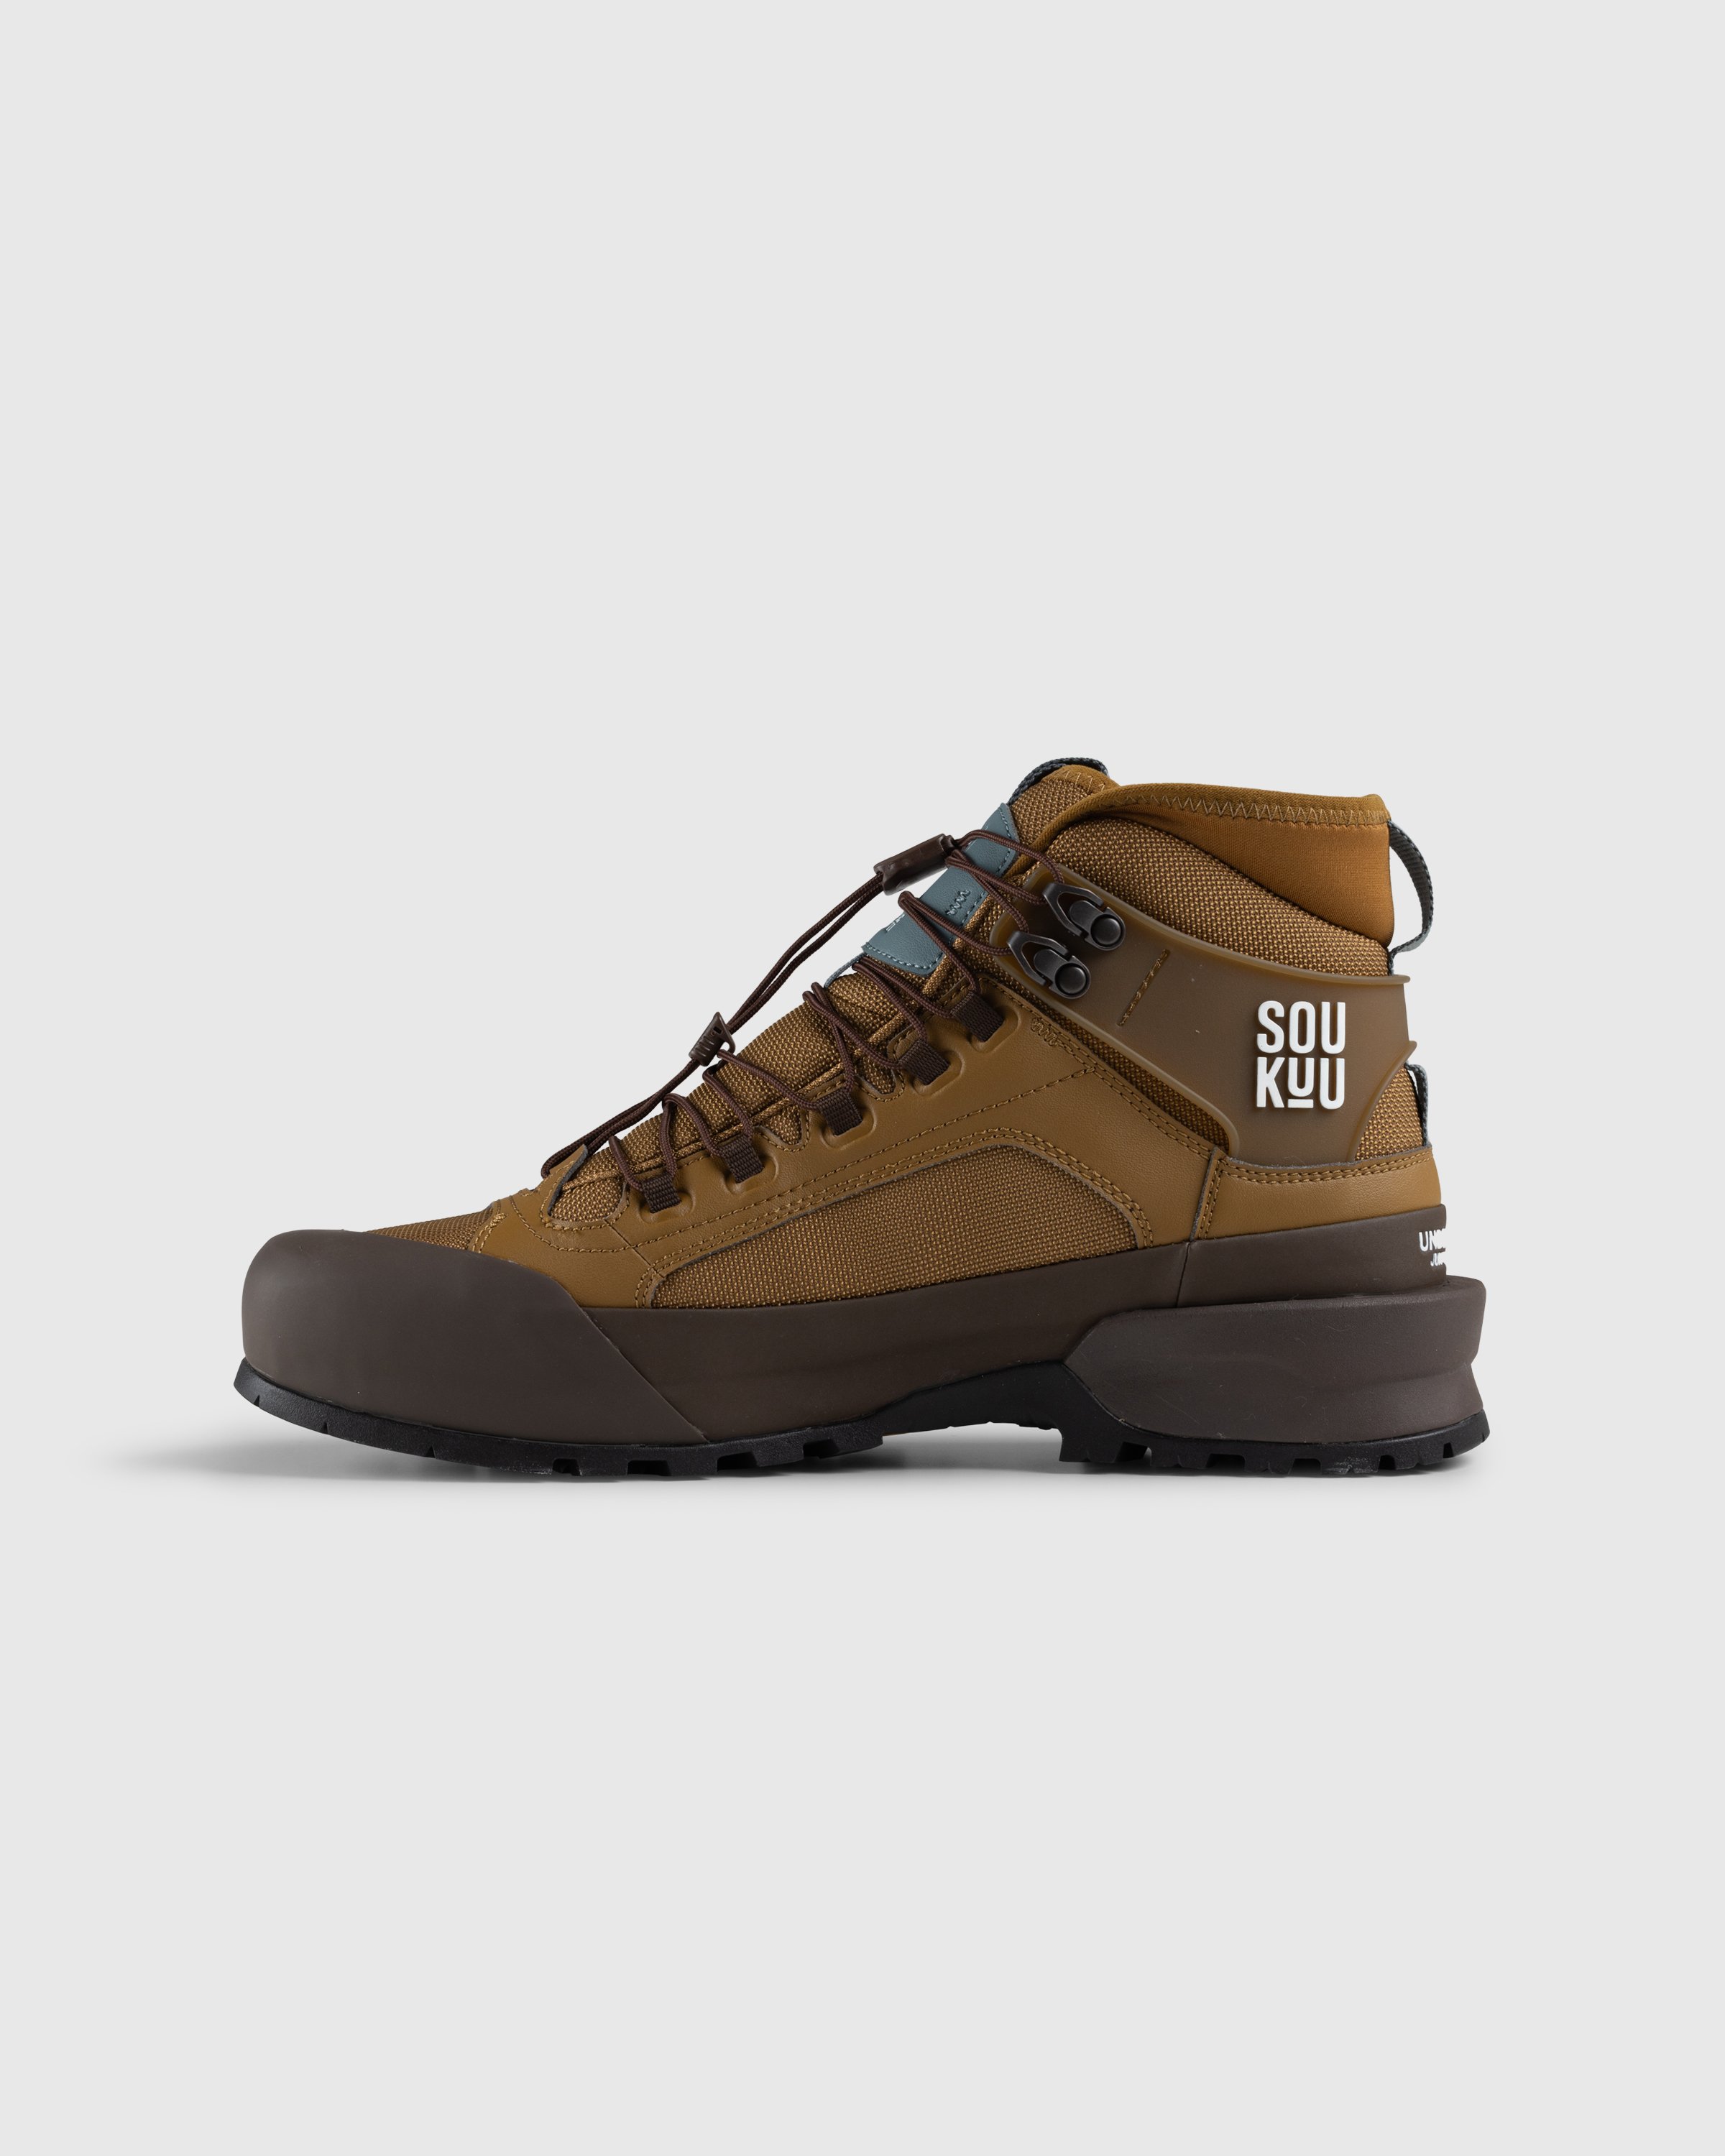 The North Face x UNDERCOVER - Soukuu Trail RAT Bronze Brown/Concrete Gray - Footwear - Multi - Image 2